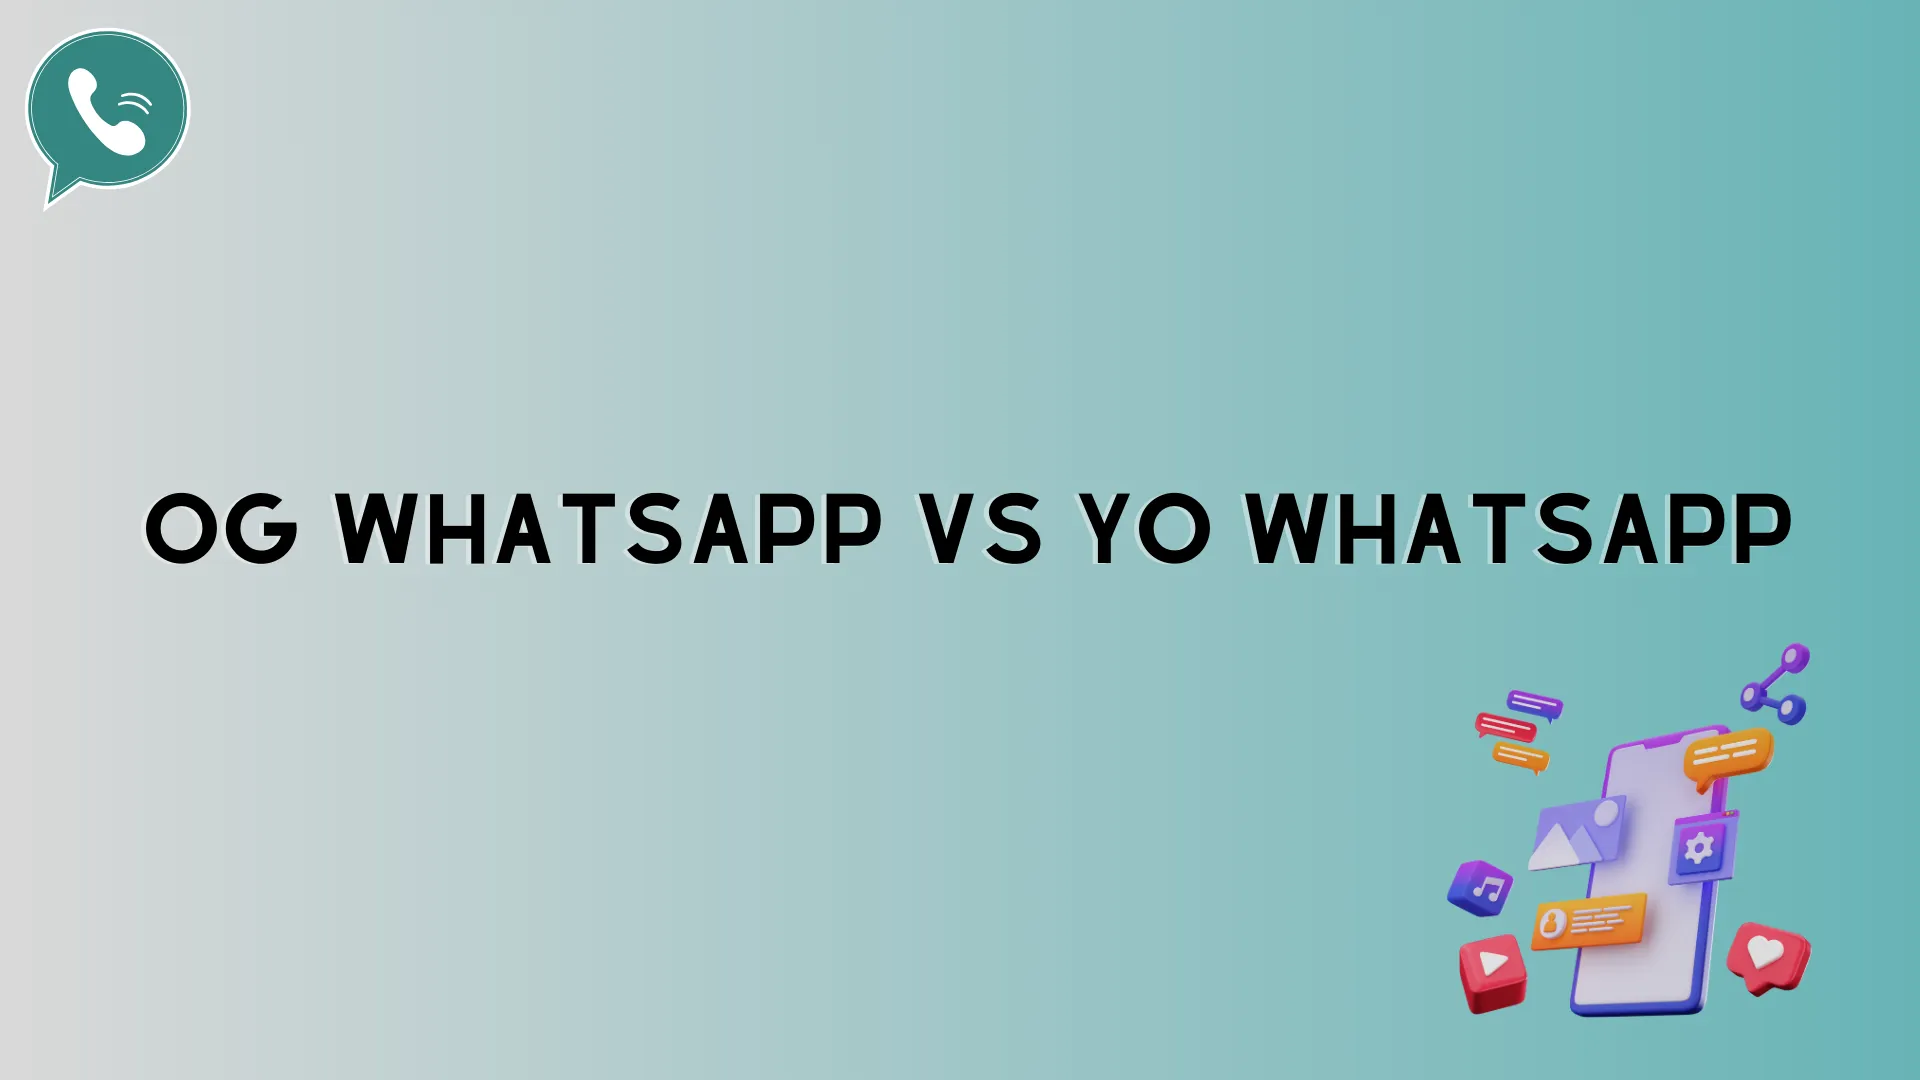 OG WhatsApp Vs YO WhatsApp Infographic